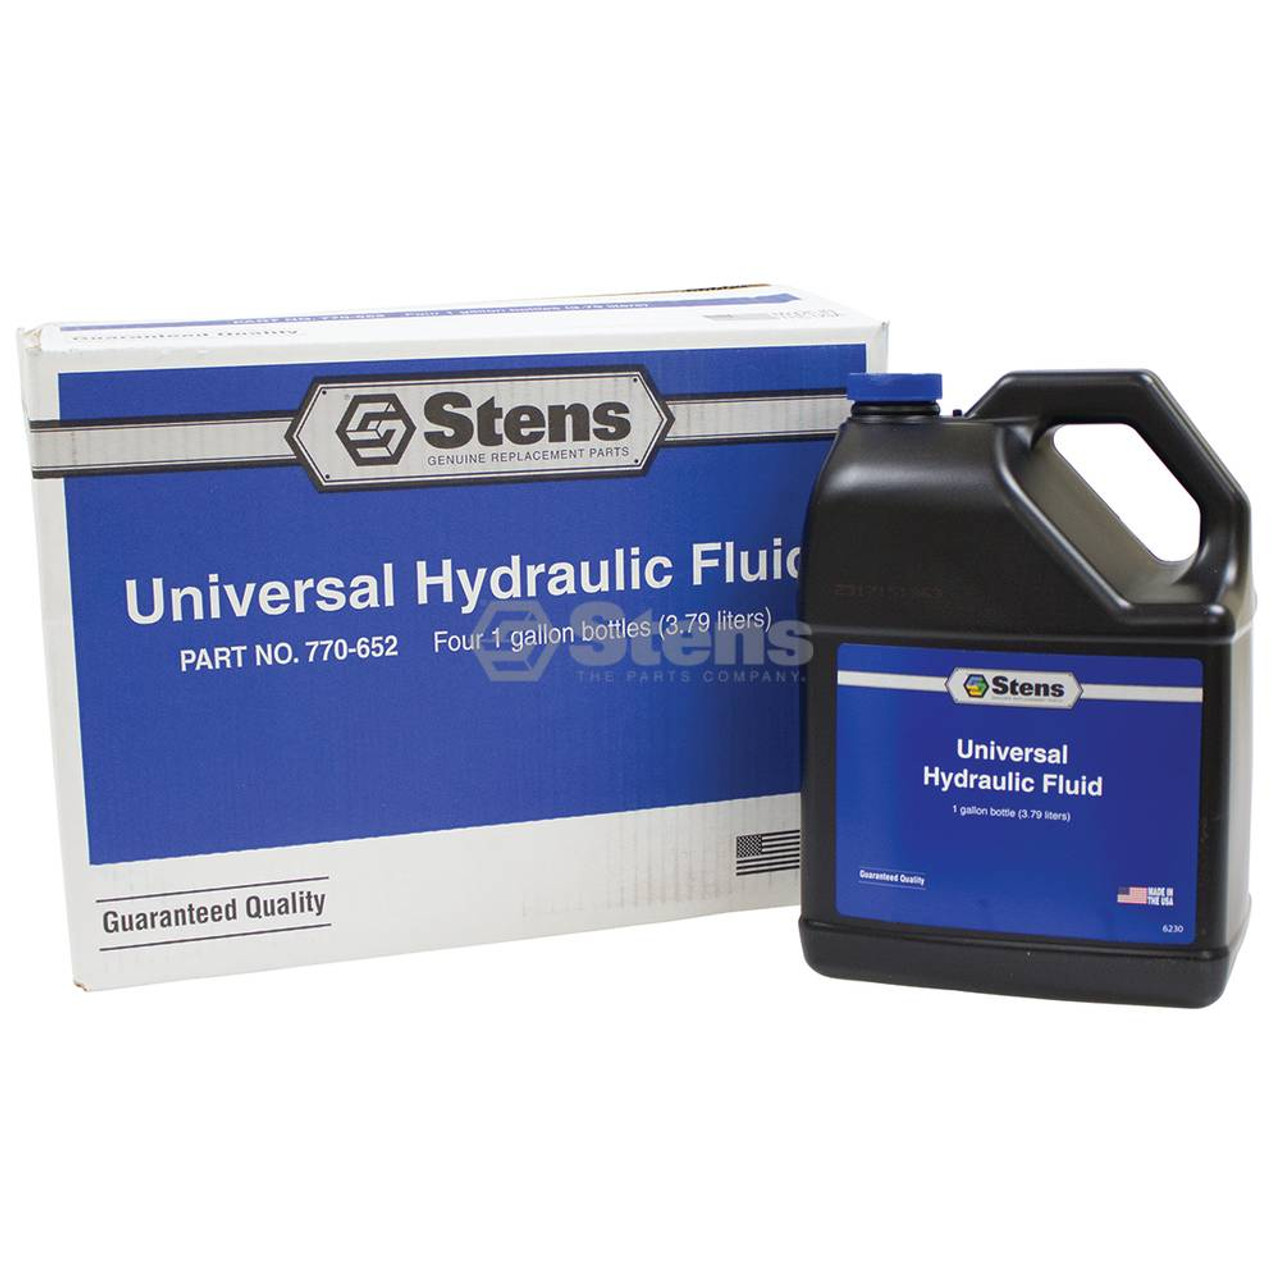 Universal Hydraulic Fluid / Gallon bottle/4 per case